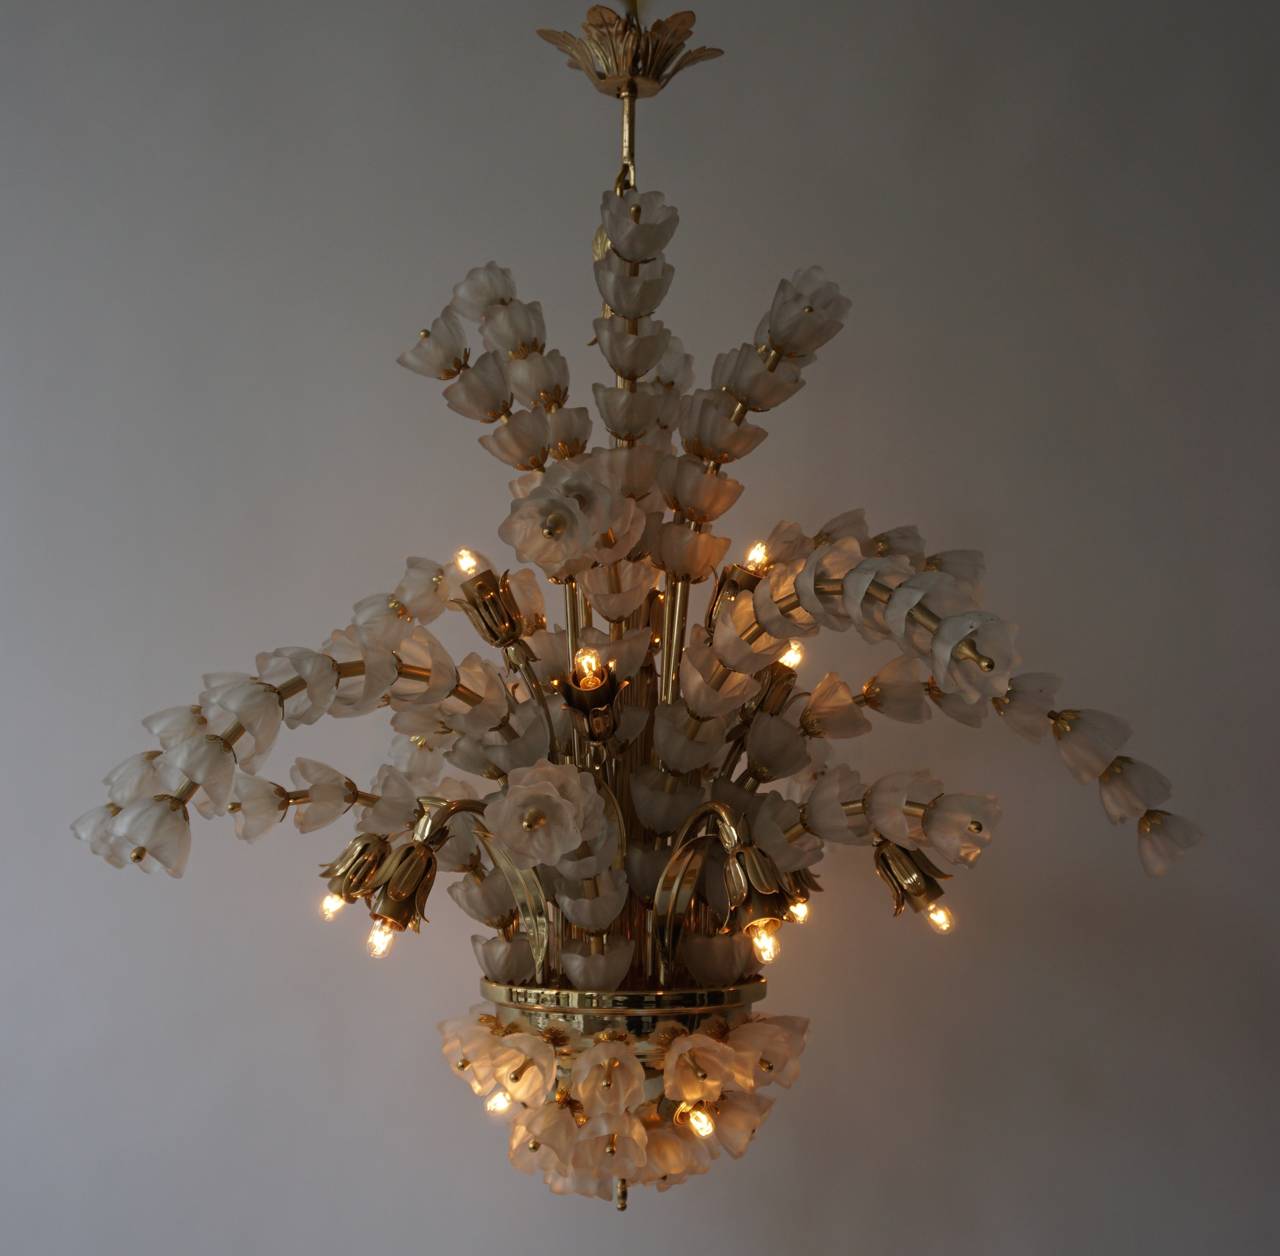 Large Italian Murano glass flower chandelier.
15 E14 bulbs.